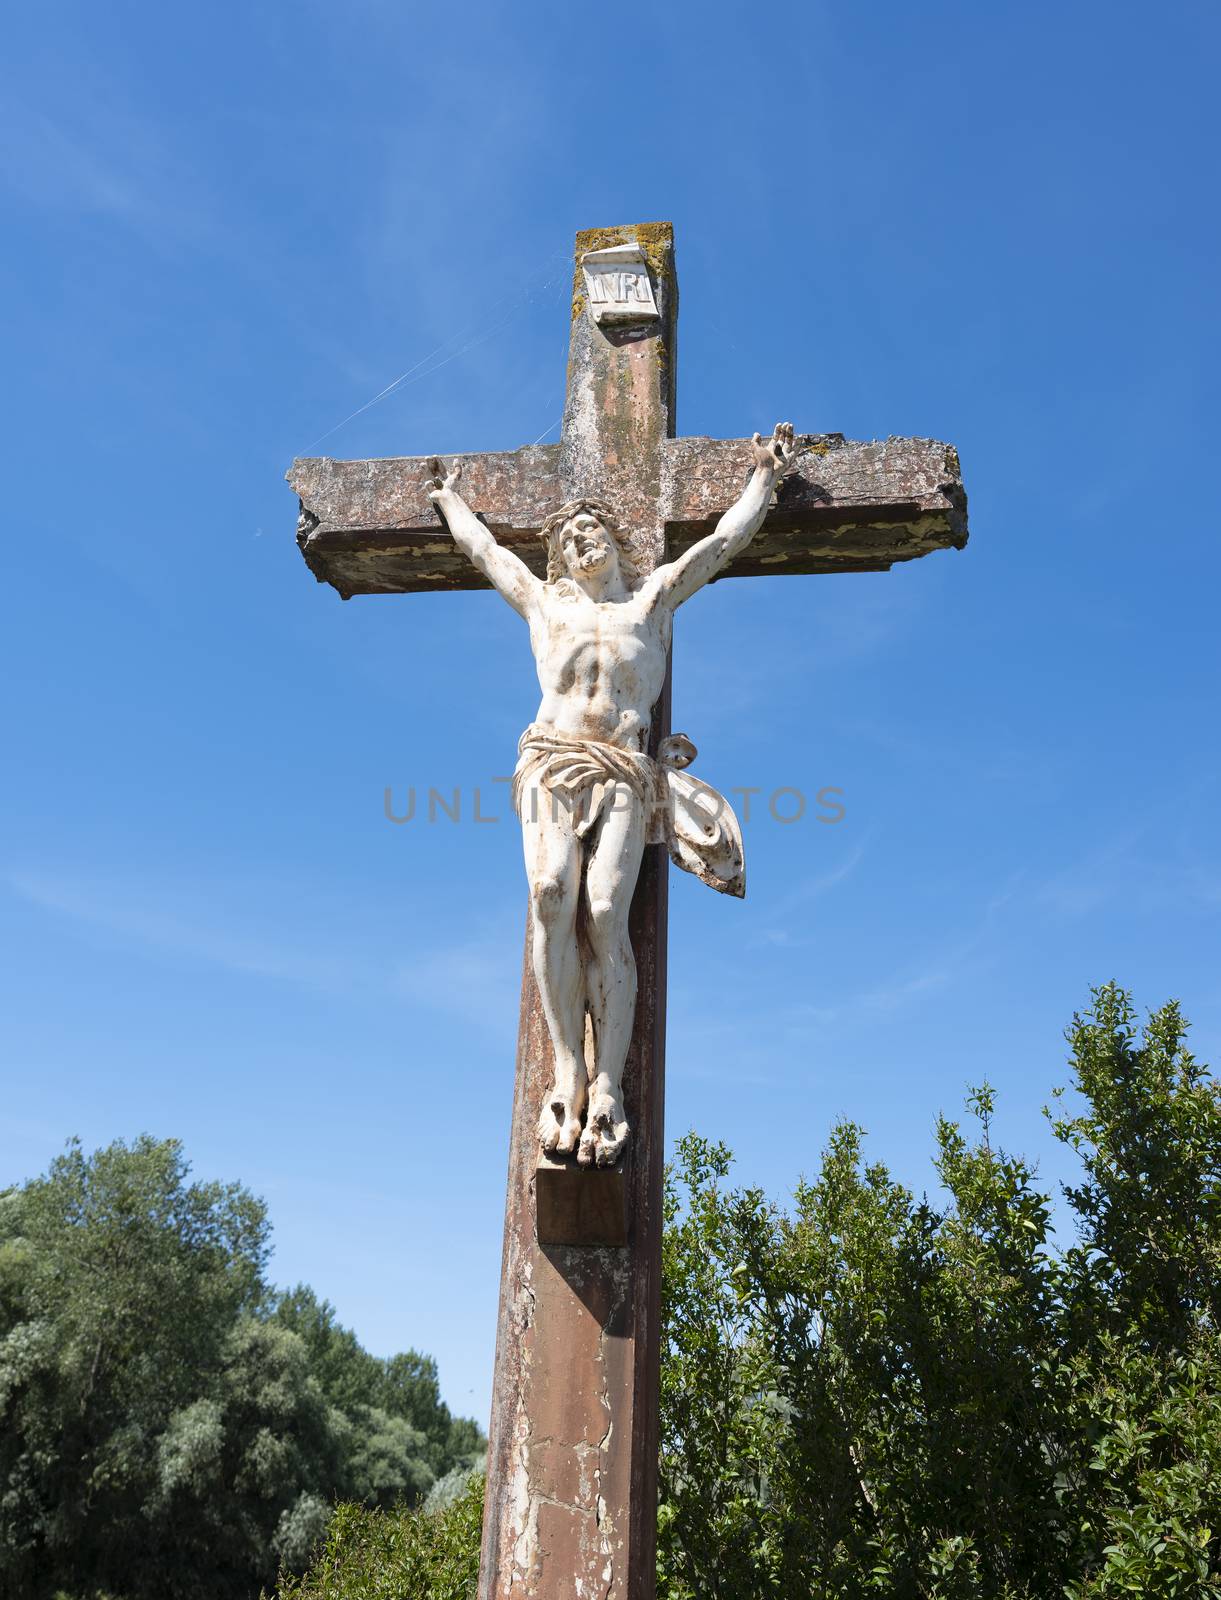 jesus statue on cross in france by ahavelaar